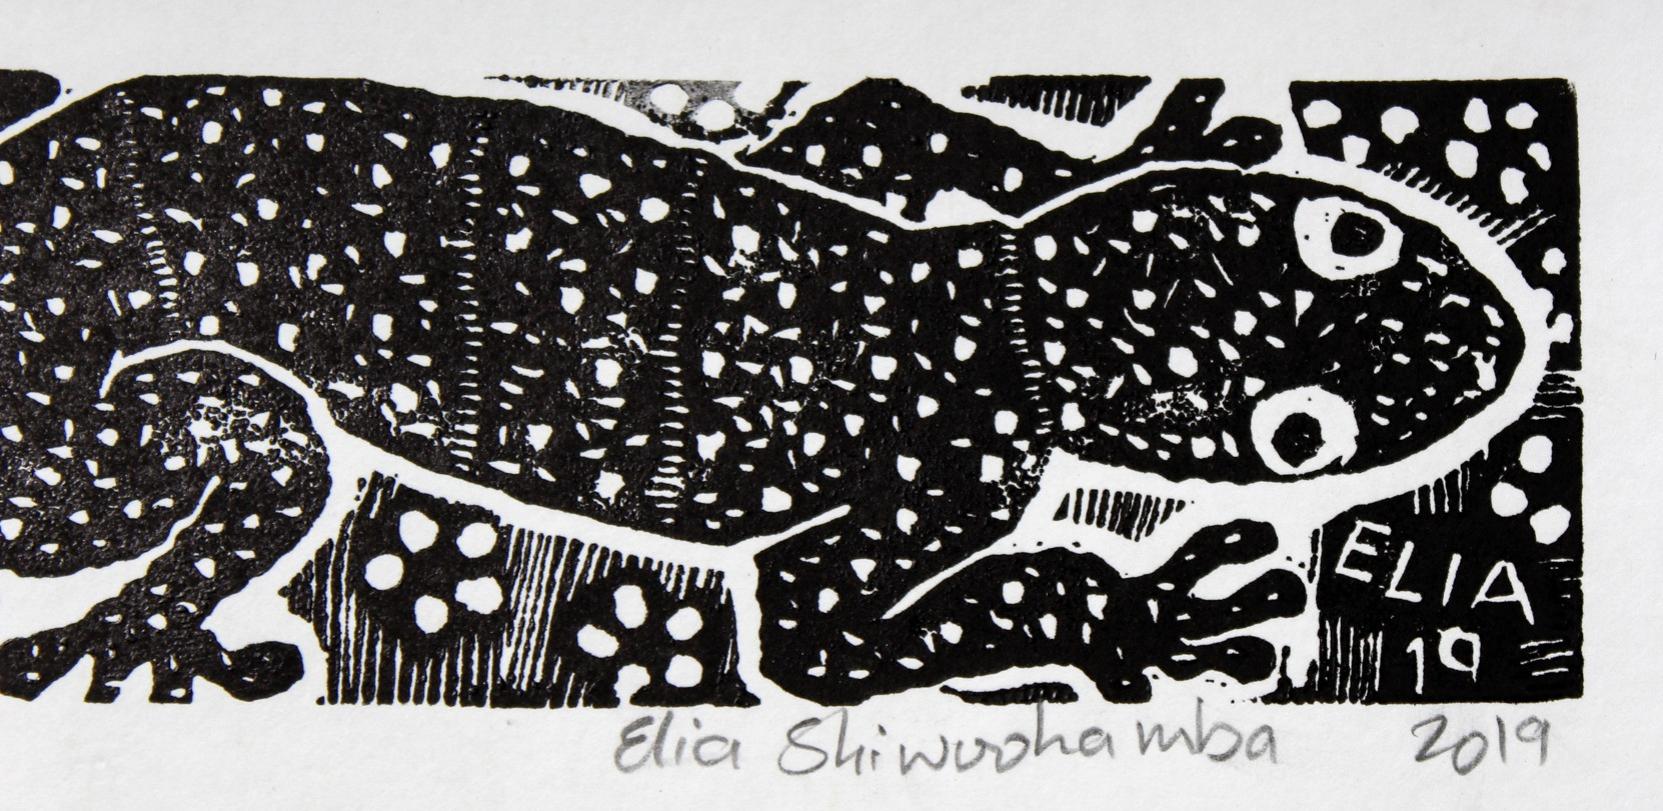 The gecko, Elia Shiwoohamba, Linoleum block print For Sale 1